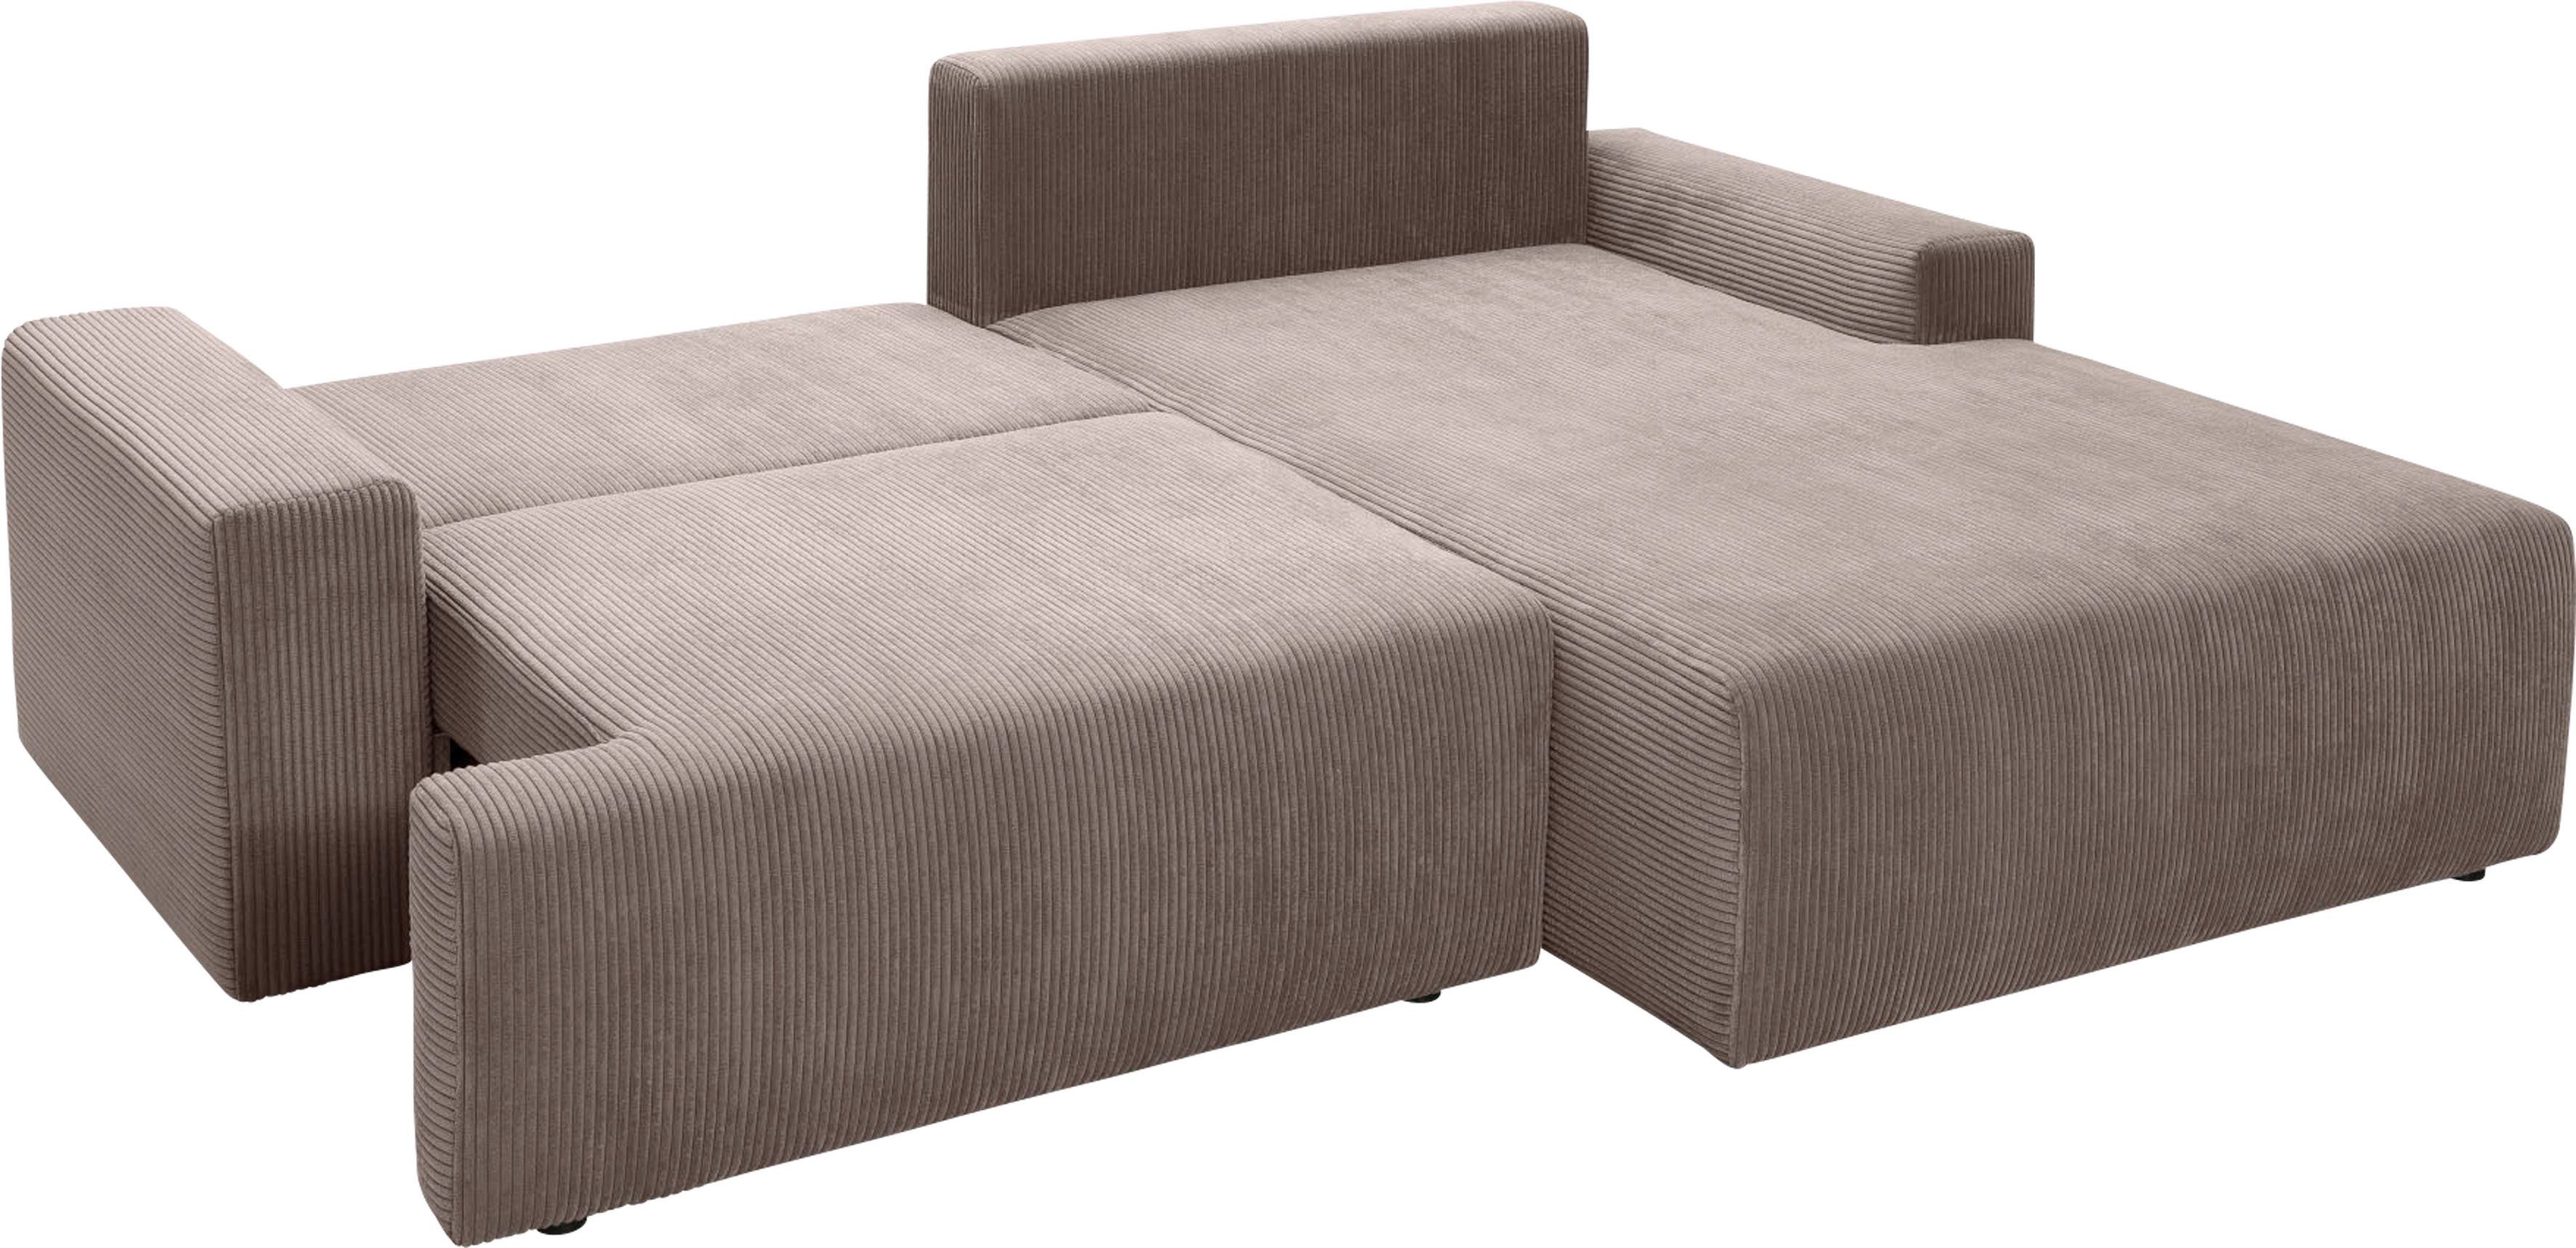 exxpo - Bettfunktion Orinoko, Ecksofa Cord-Farben inklusive sofa fashion verschiedenen in Bettkasten und cappuccino